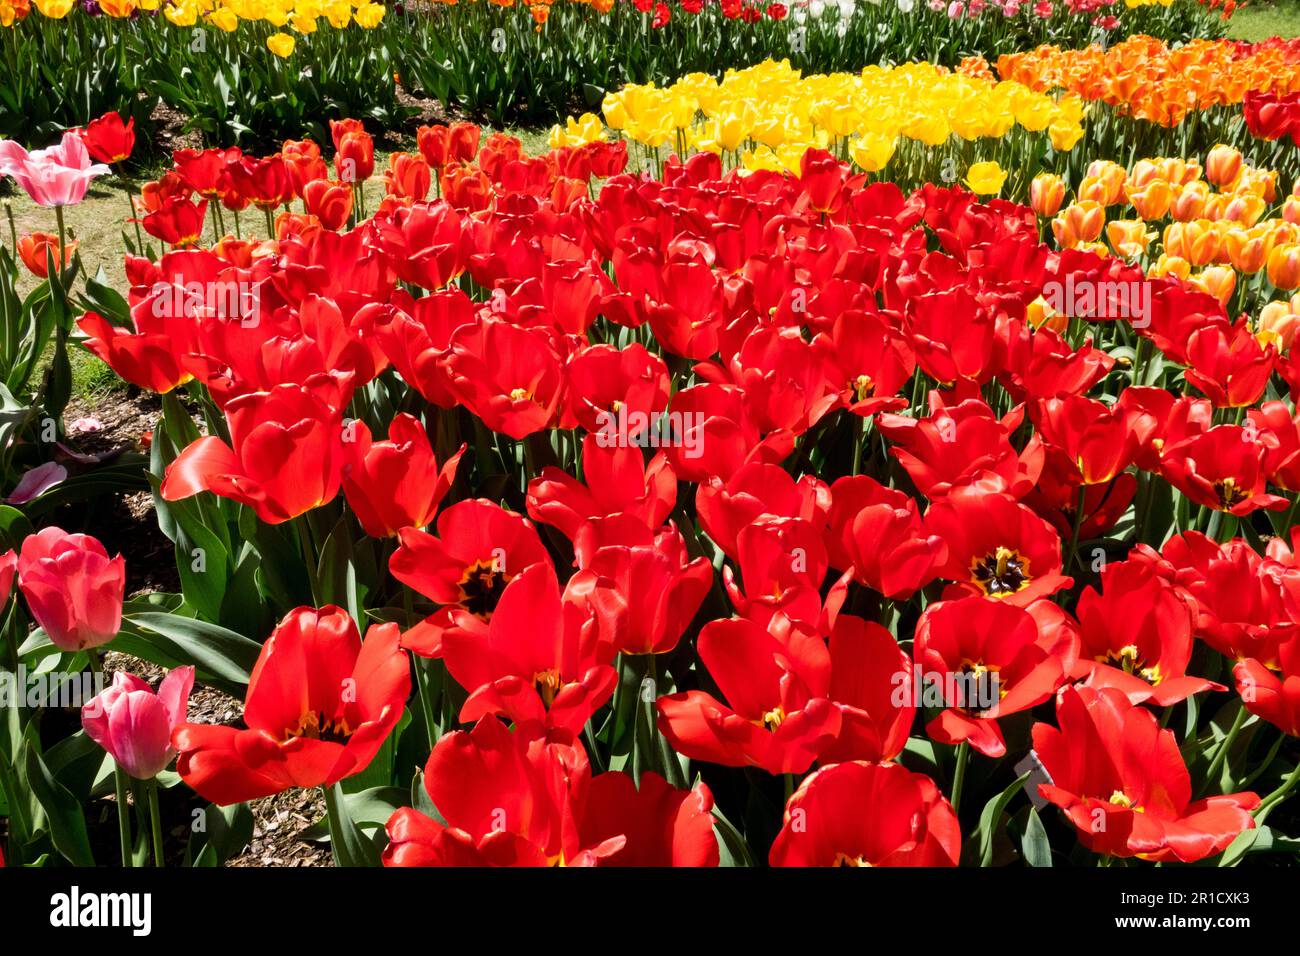 Display of various tulips at Garden Stock Photo